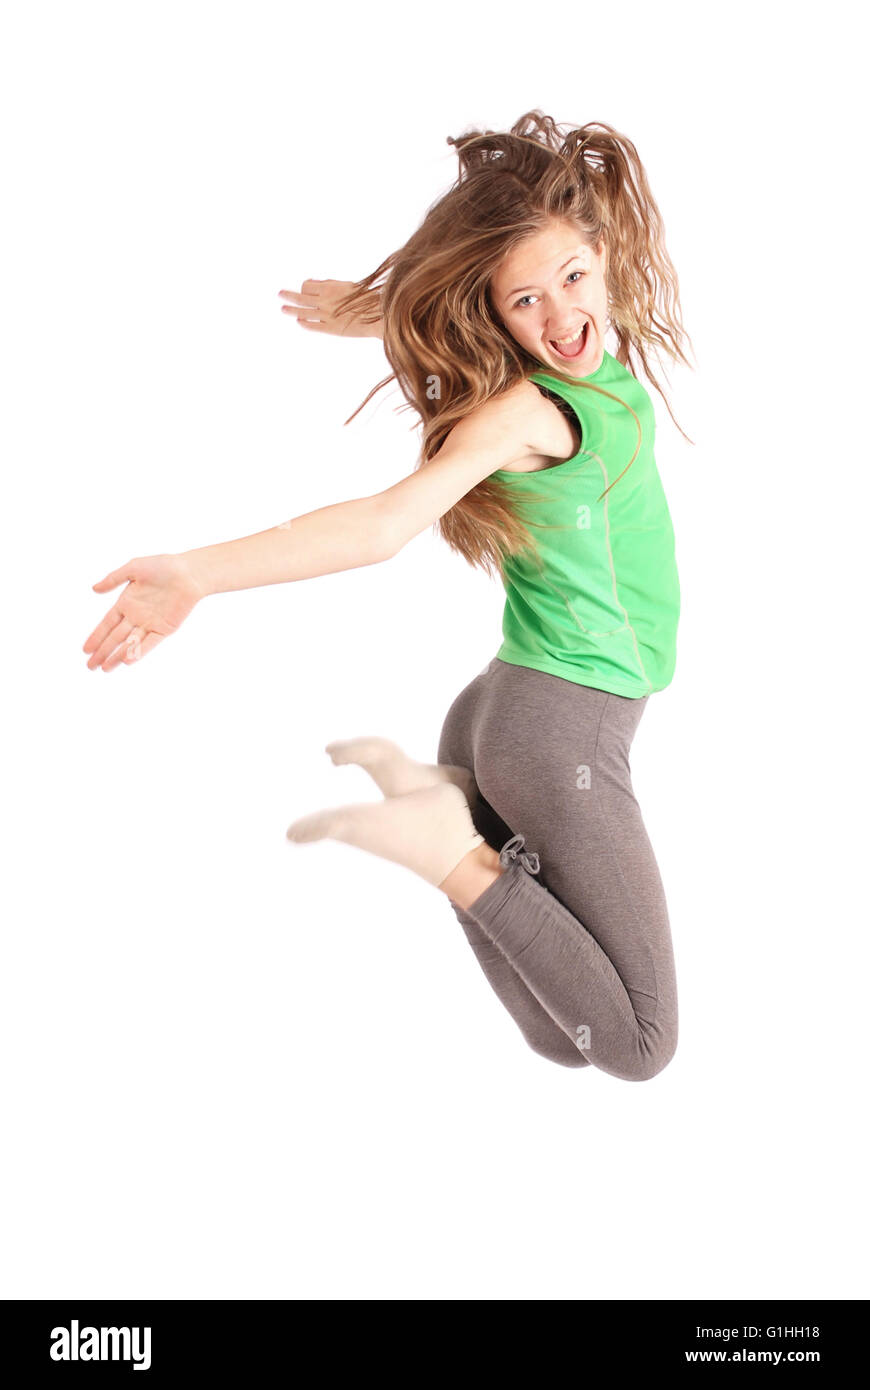 Girl jumping isolated on white studio background Stock Photo - Alamy